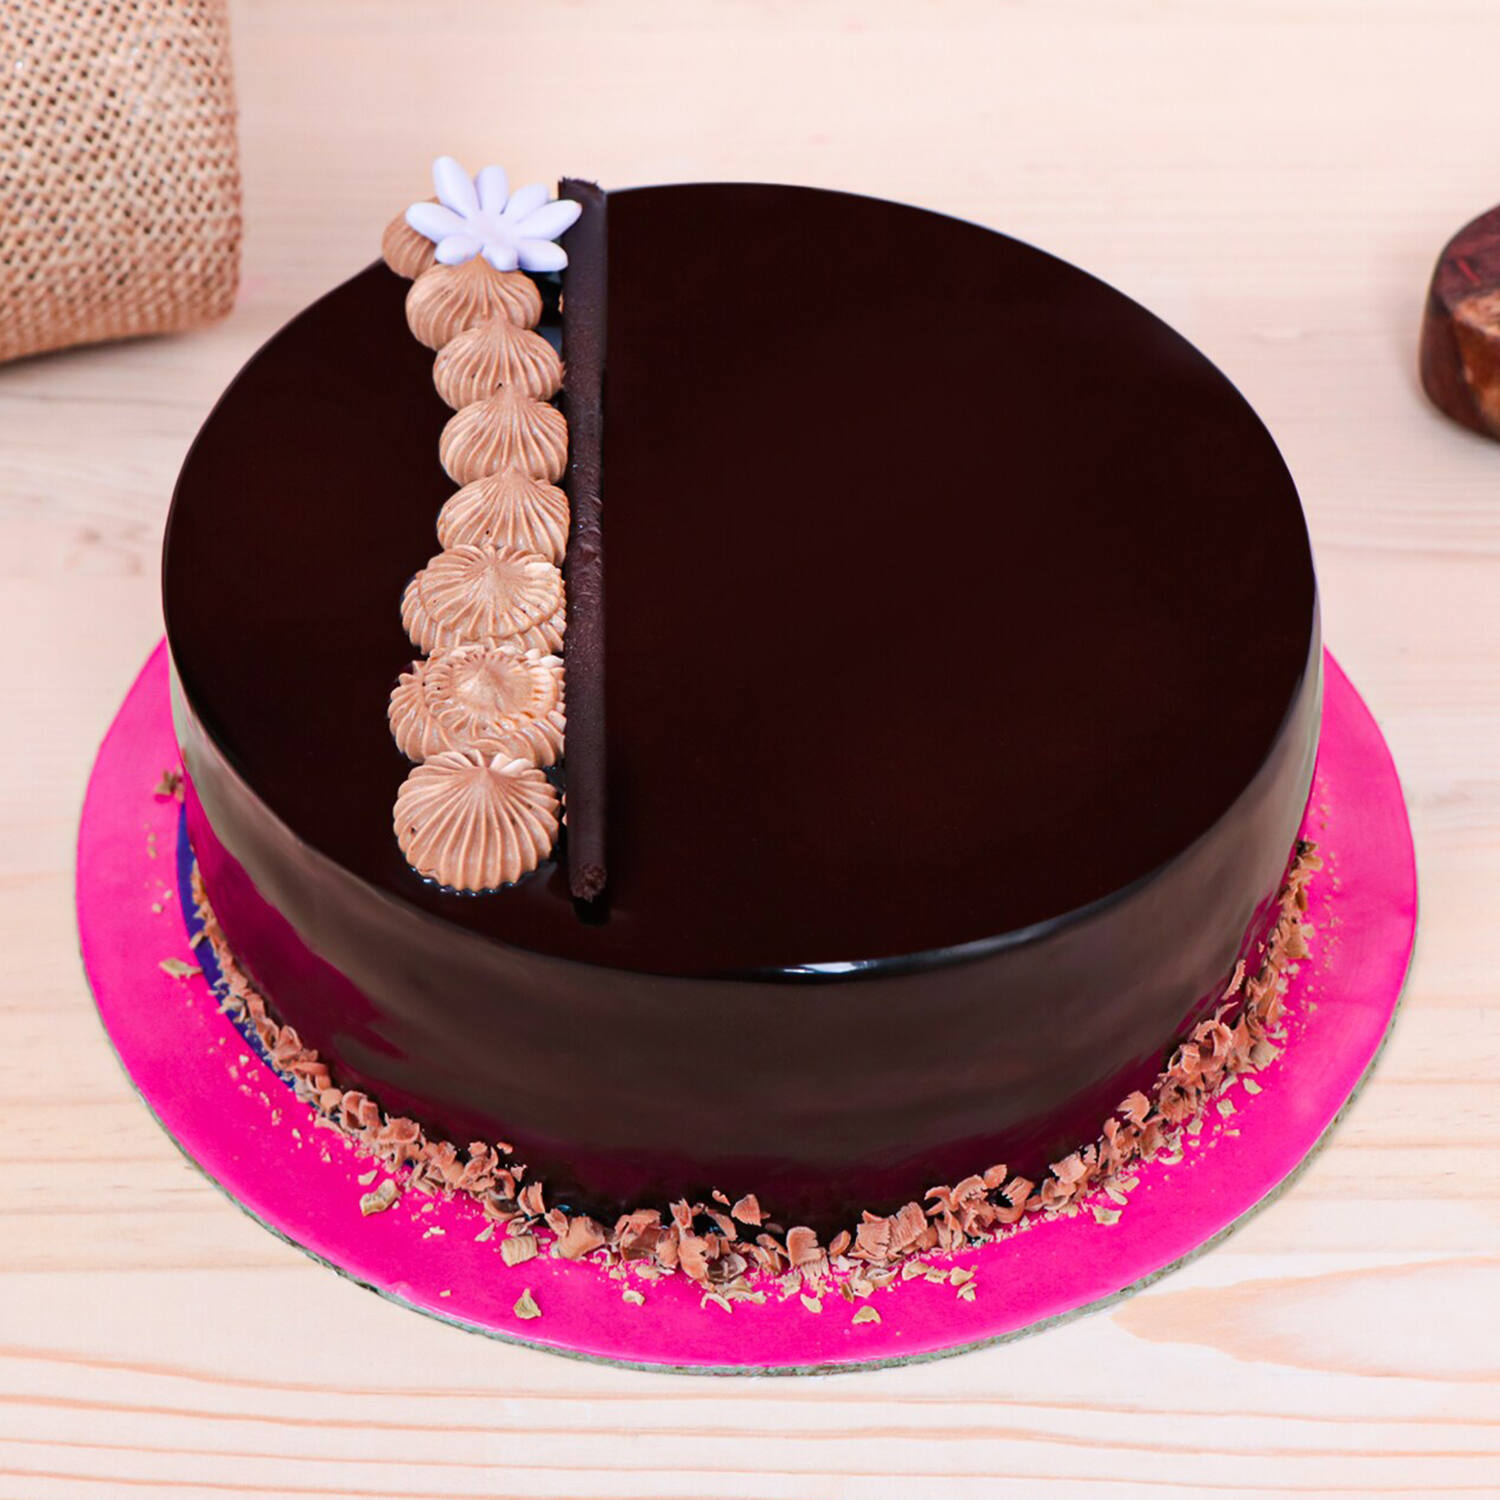 Belgian Chocolate Cake | The Handmade Cake Company